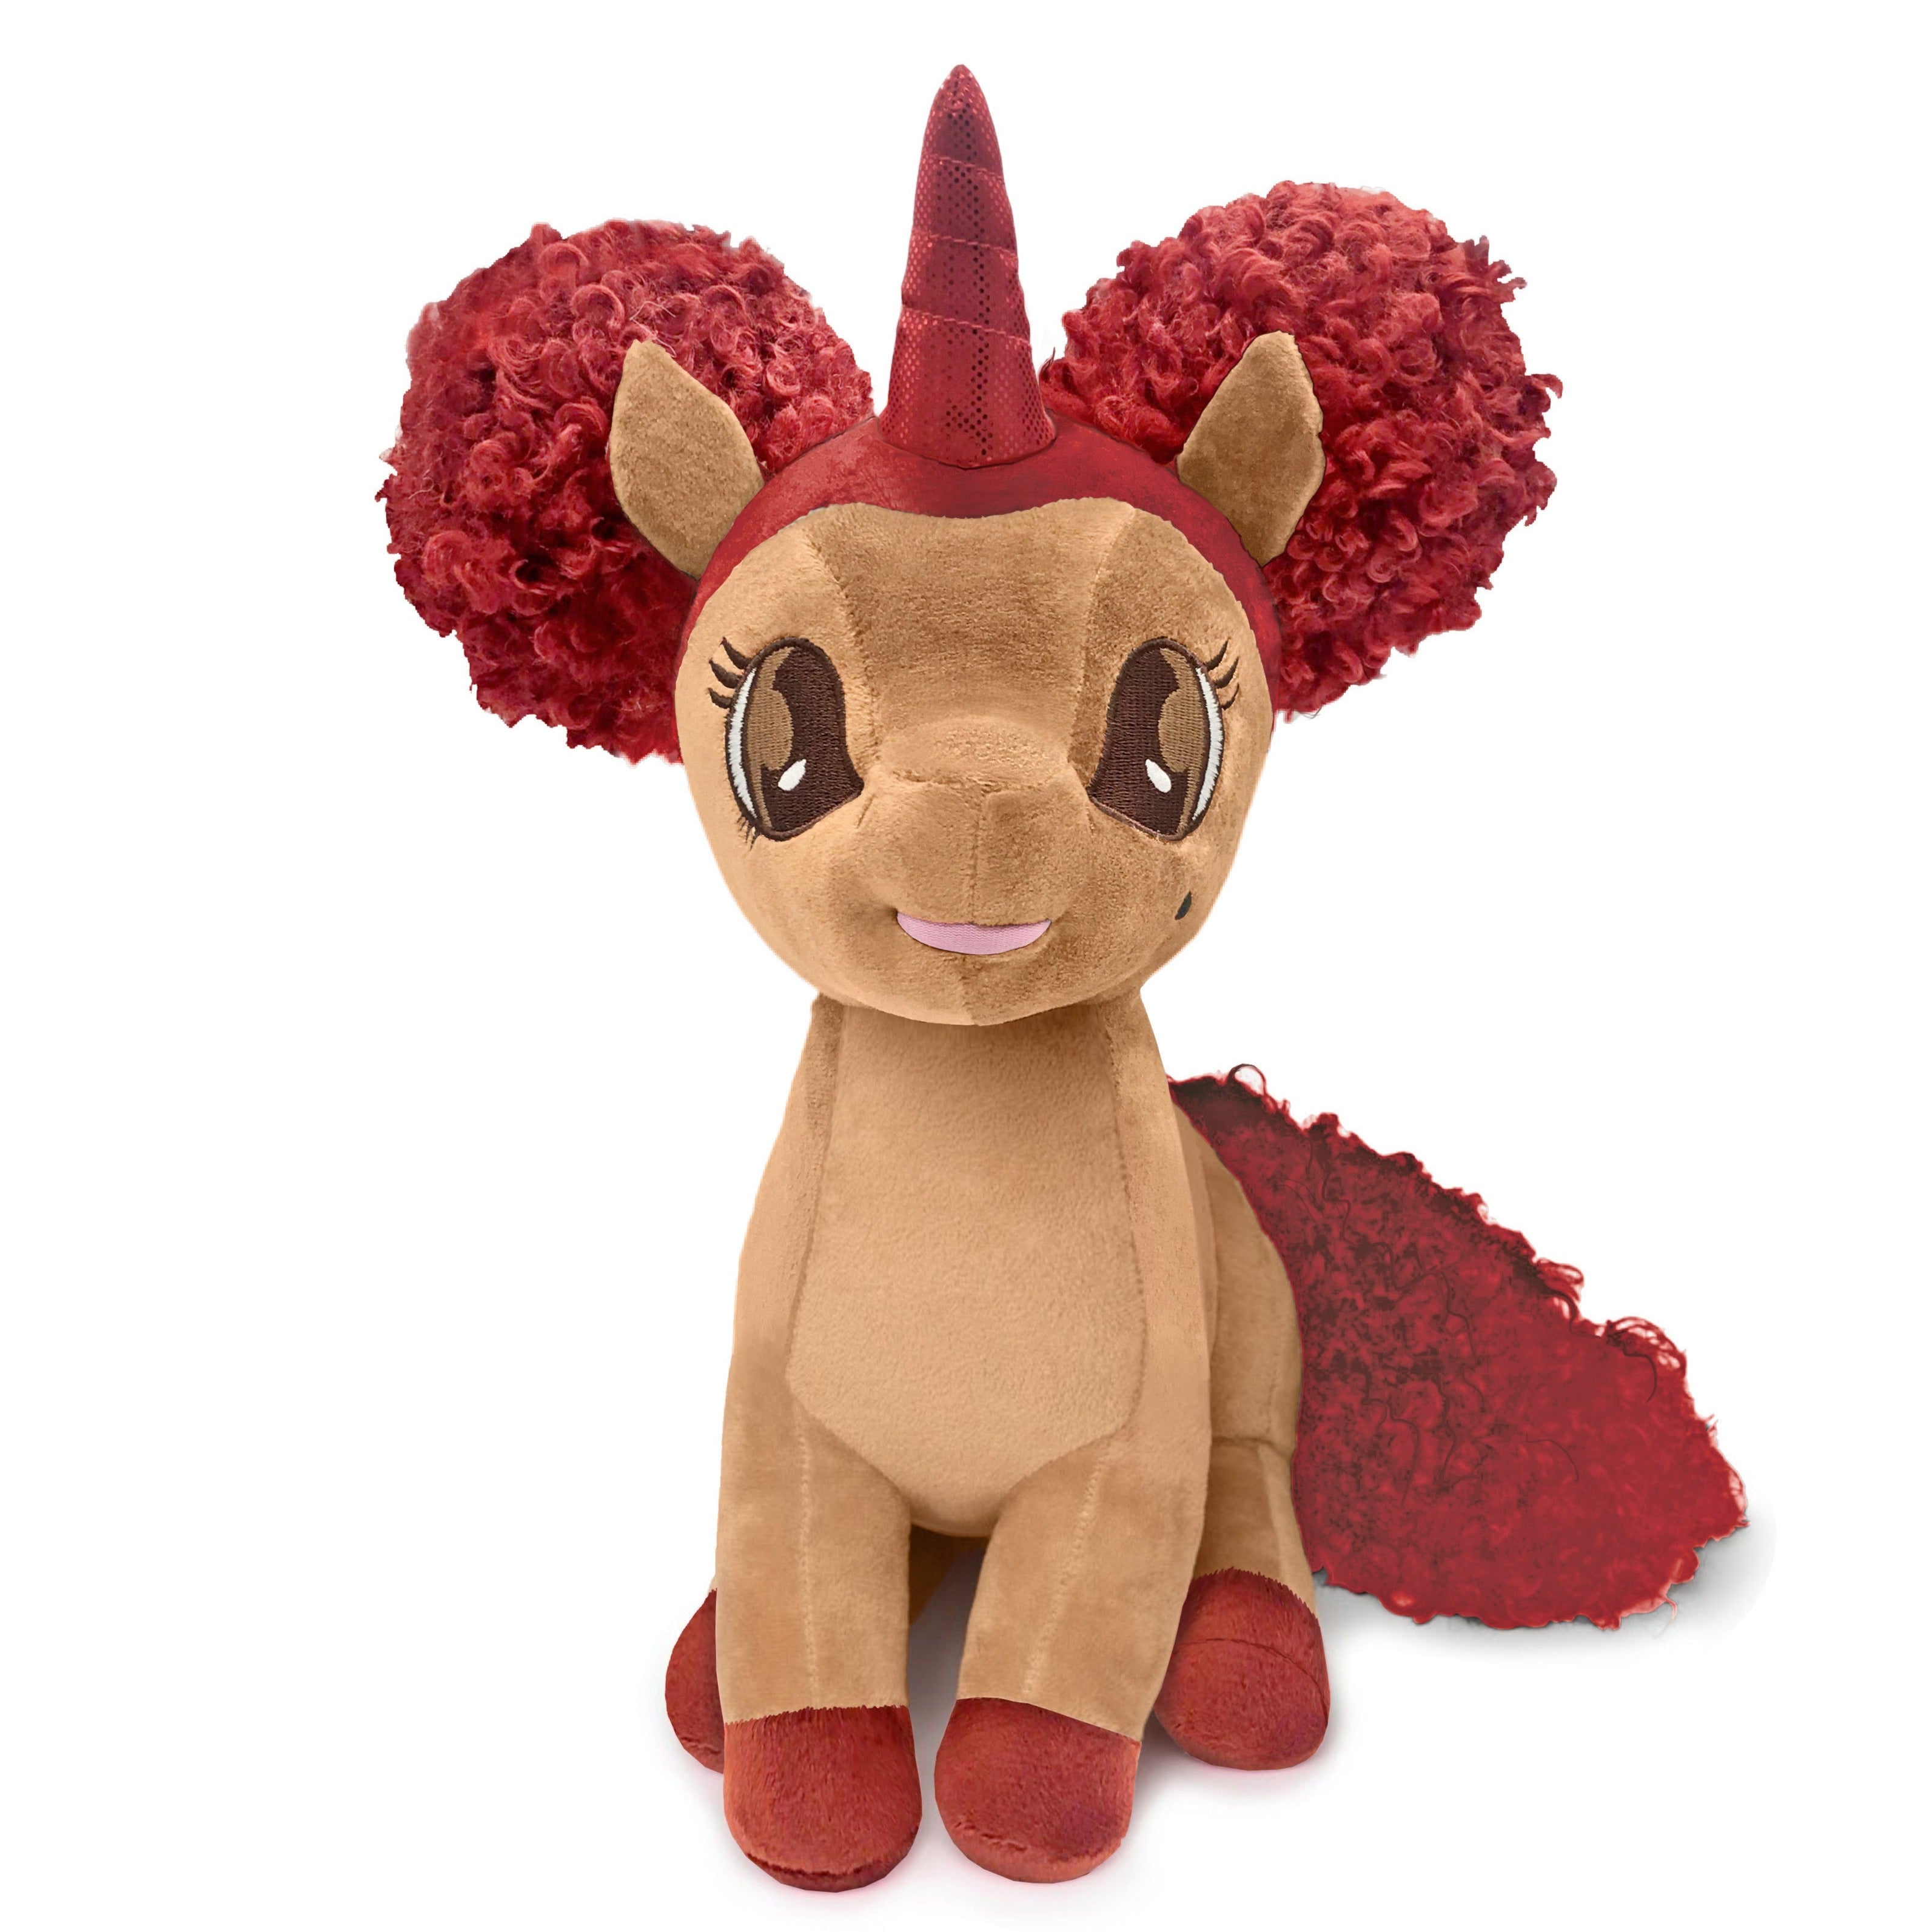 Ciara Black Unicorn Plush Toy with Red Hair - 15 inch